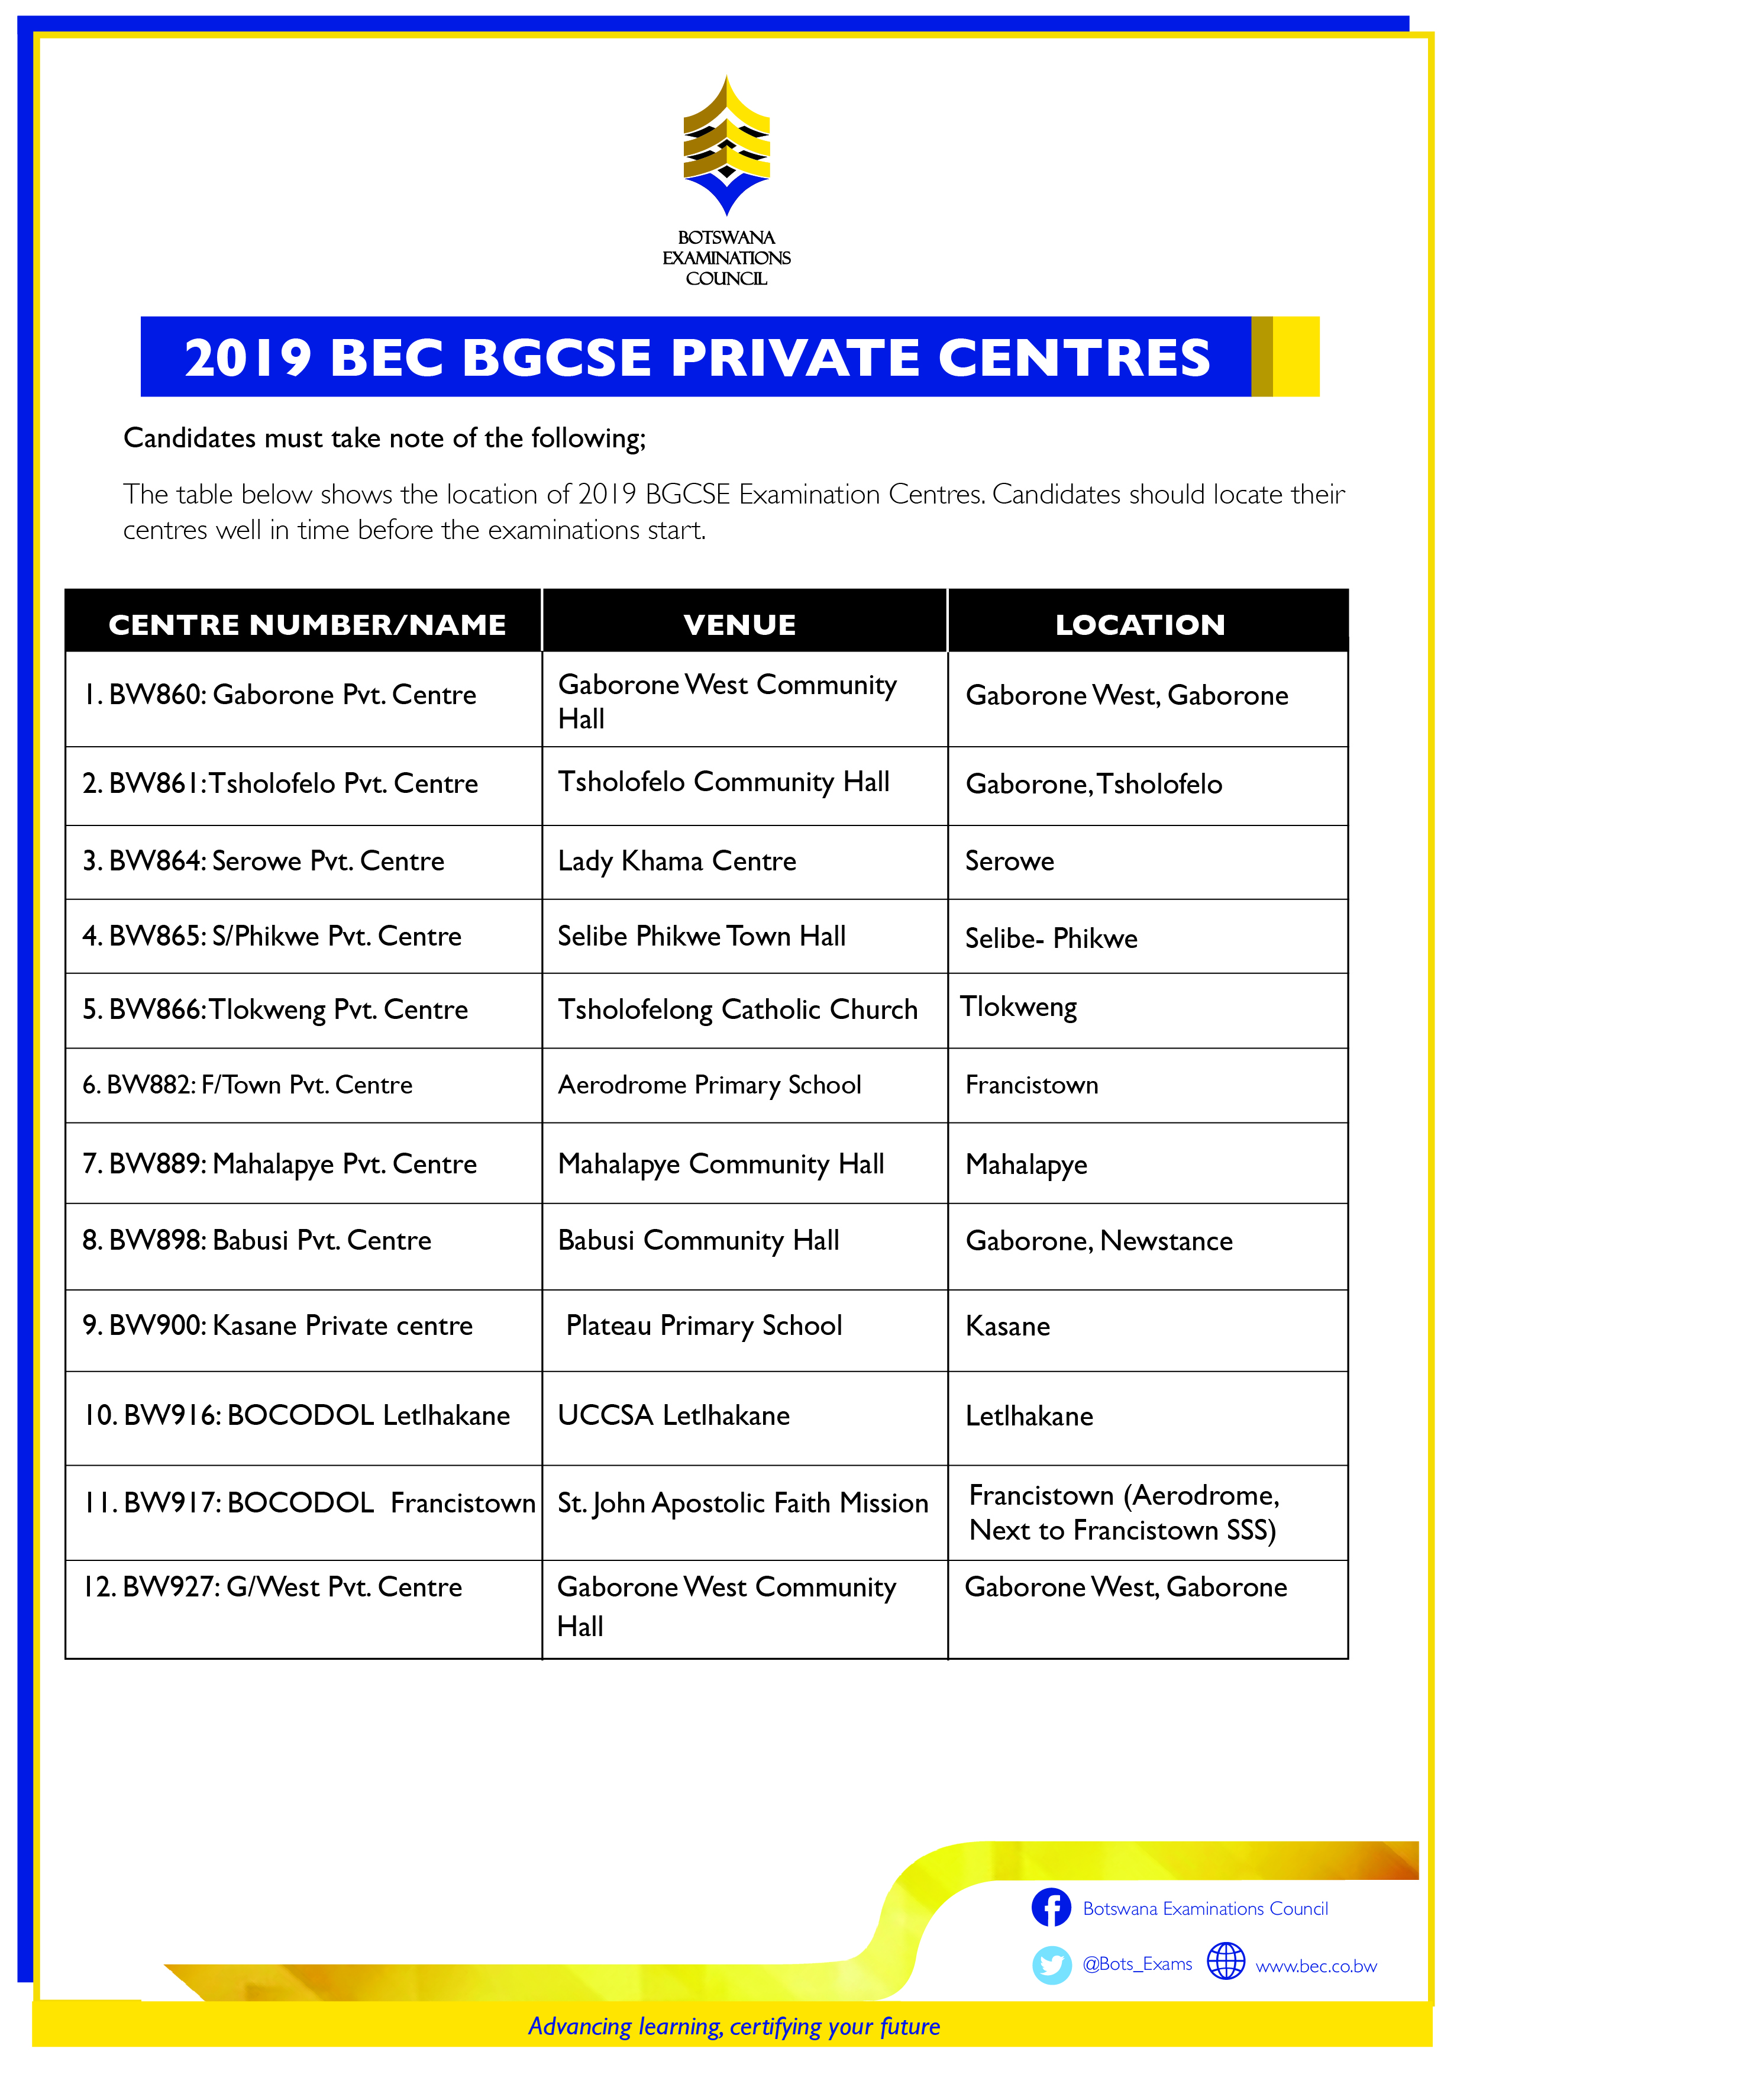 2019 BEC BGCSE PRIVATE CENTRES